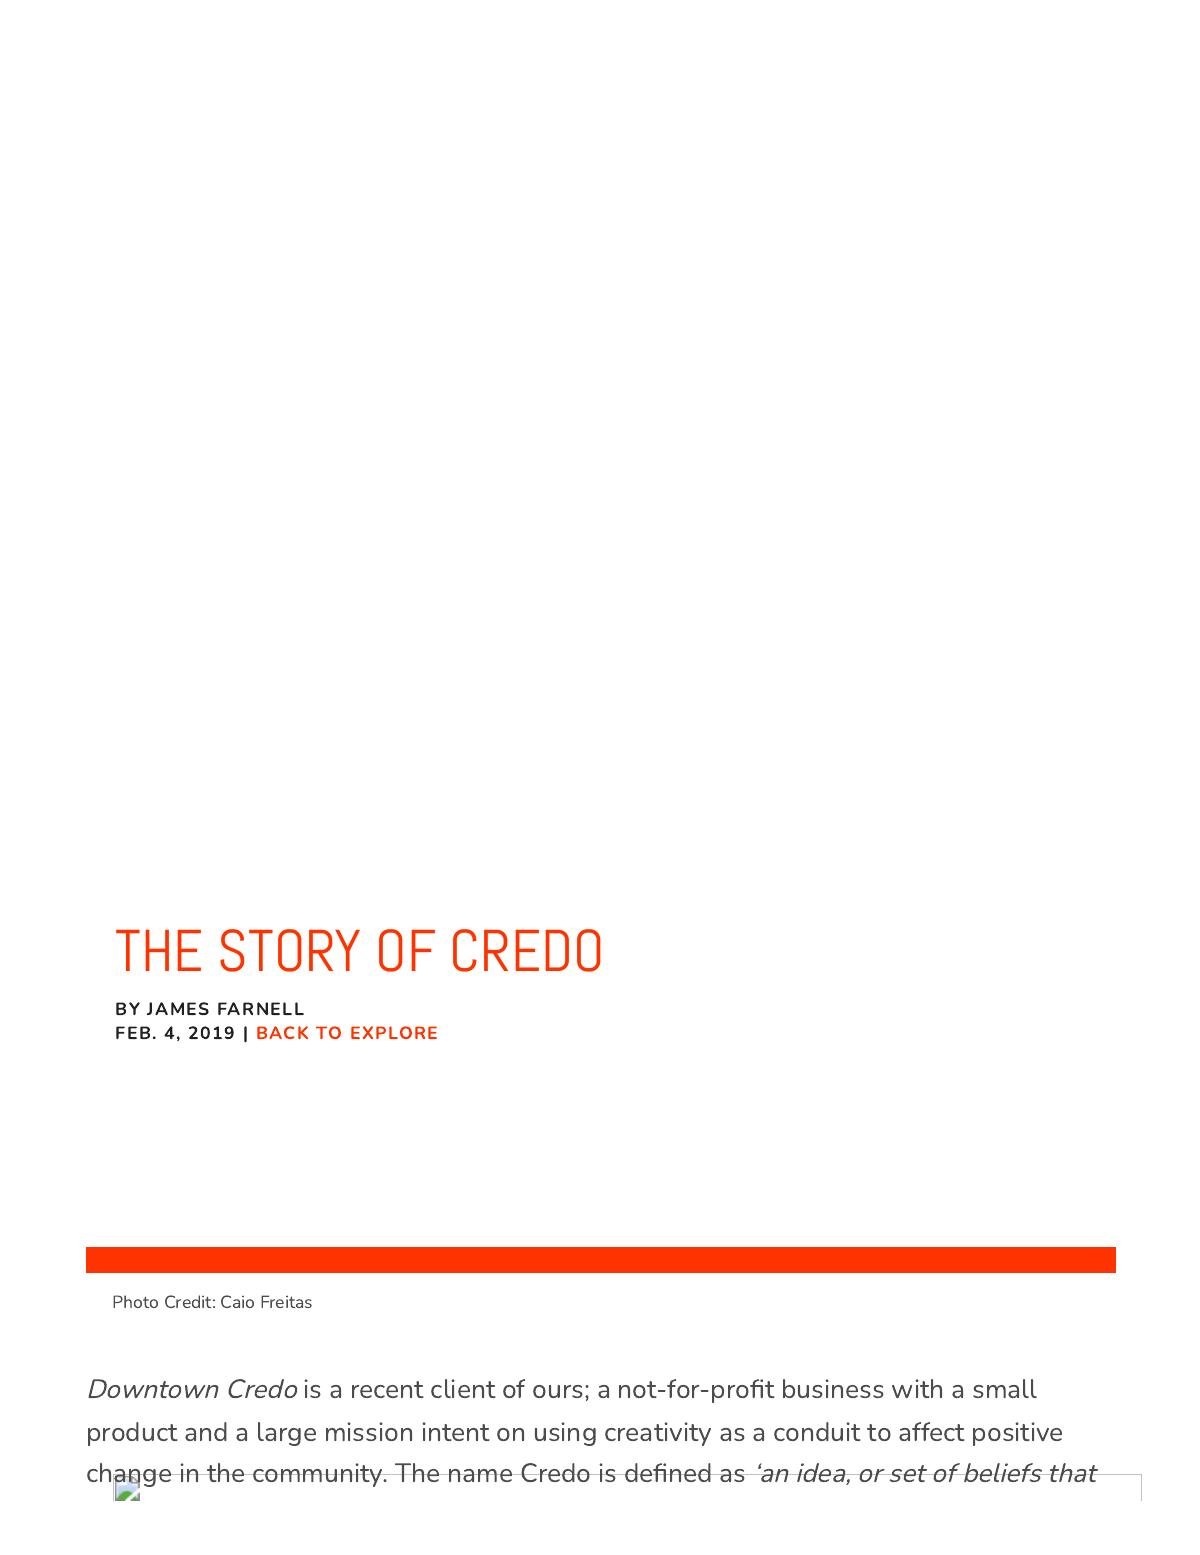 The Story of Credo